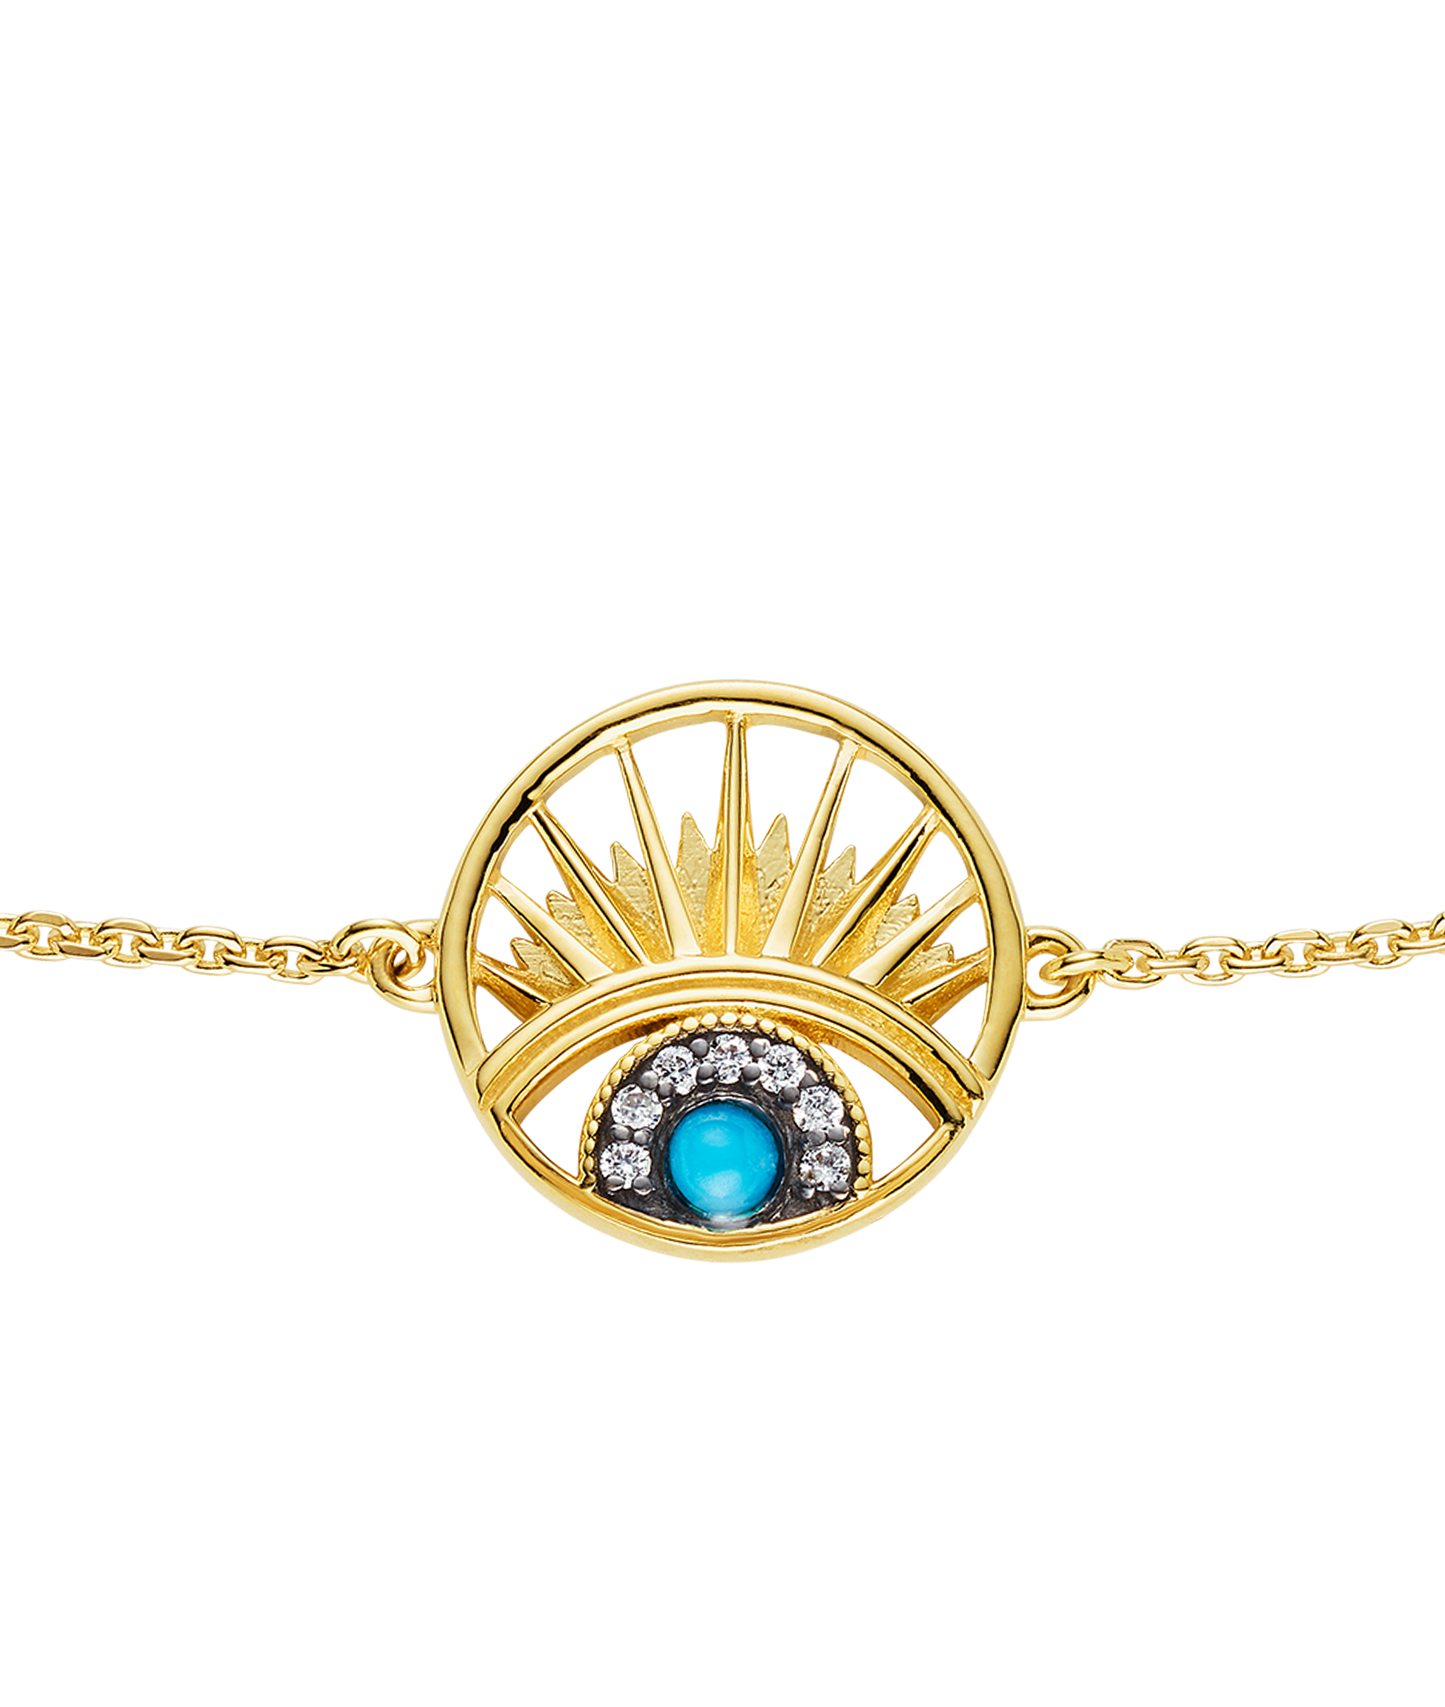 'Keep An Eye On Me' Bracelet Turquoise